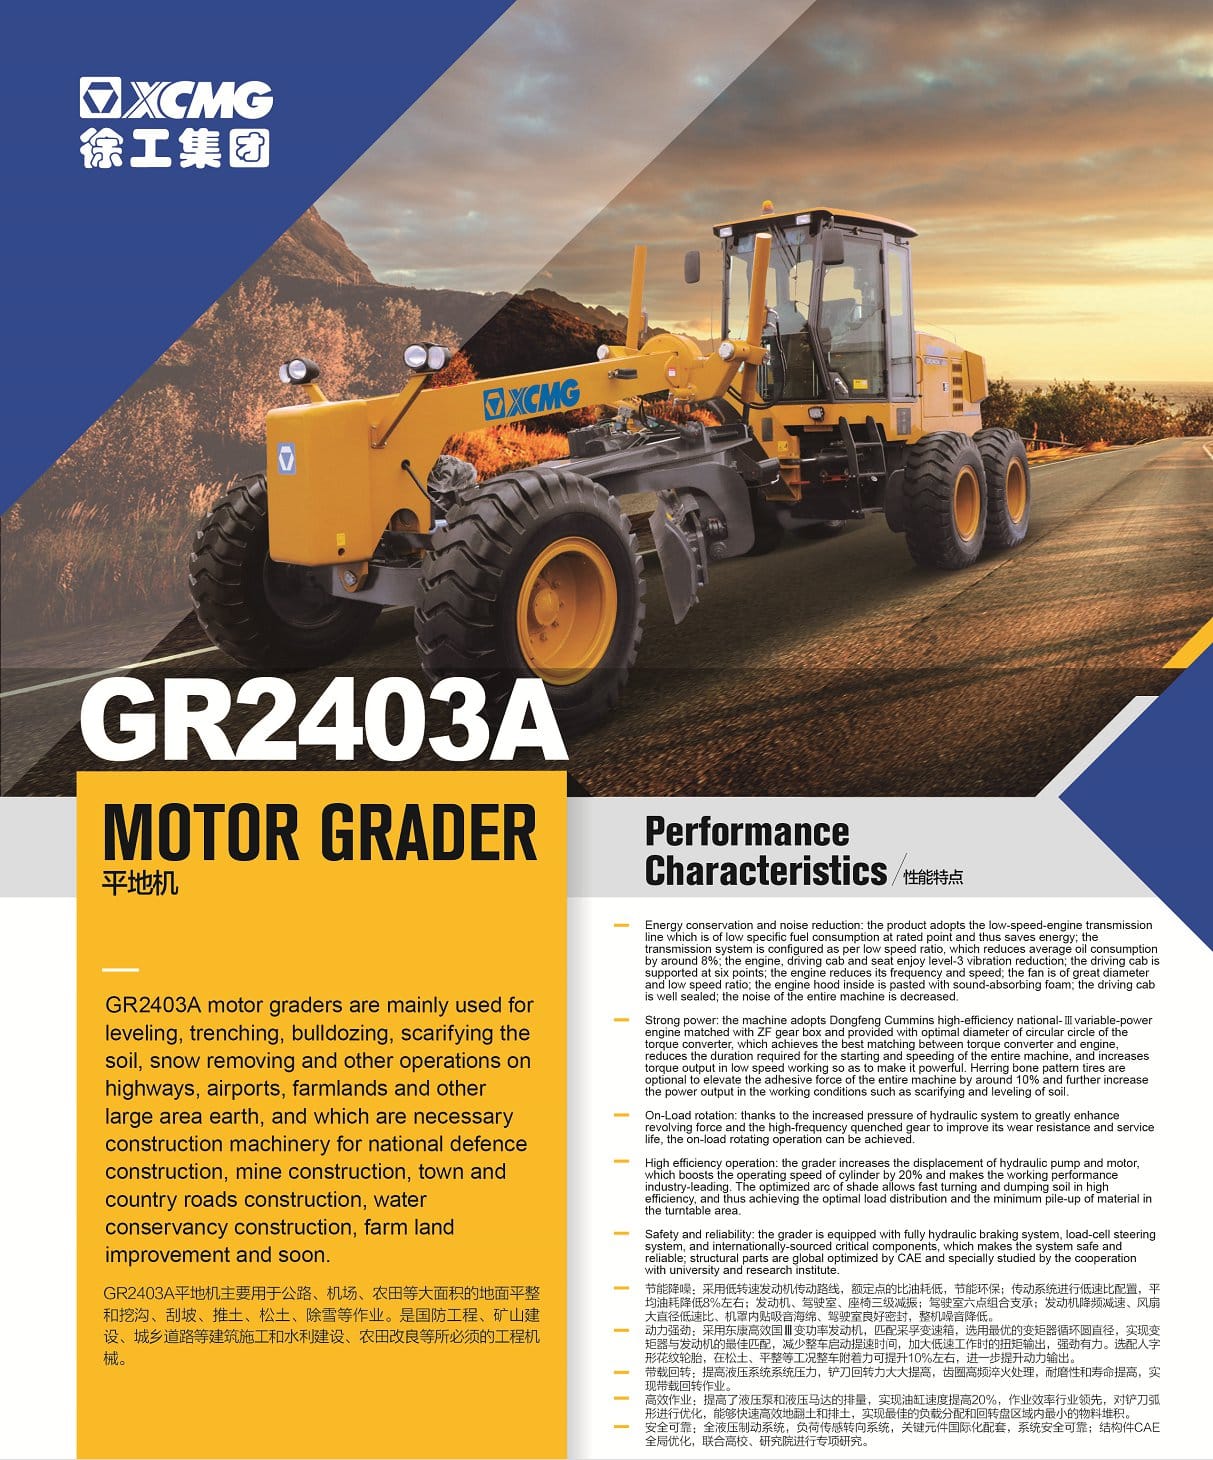 XCMG Official GR2403A Motor Grader for sale